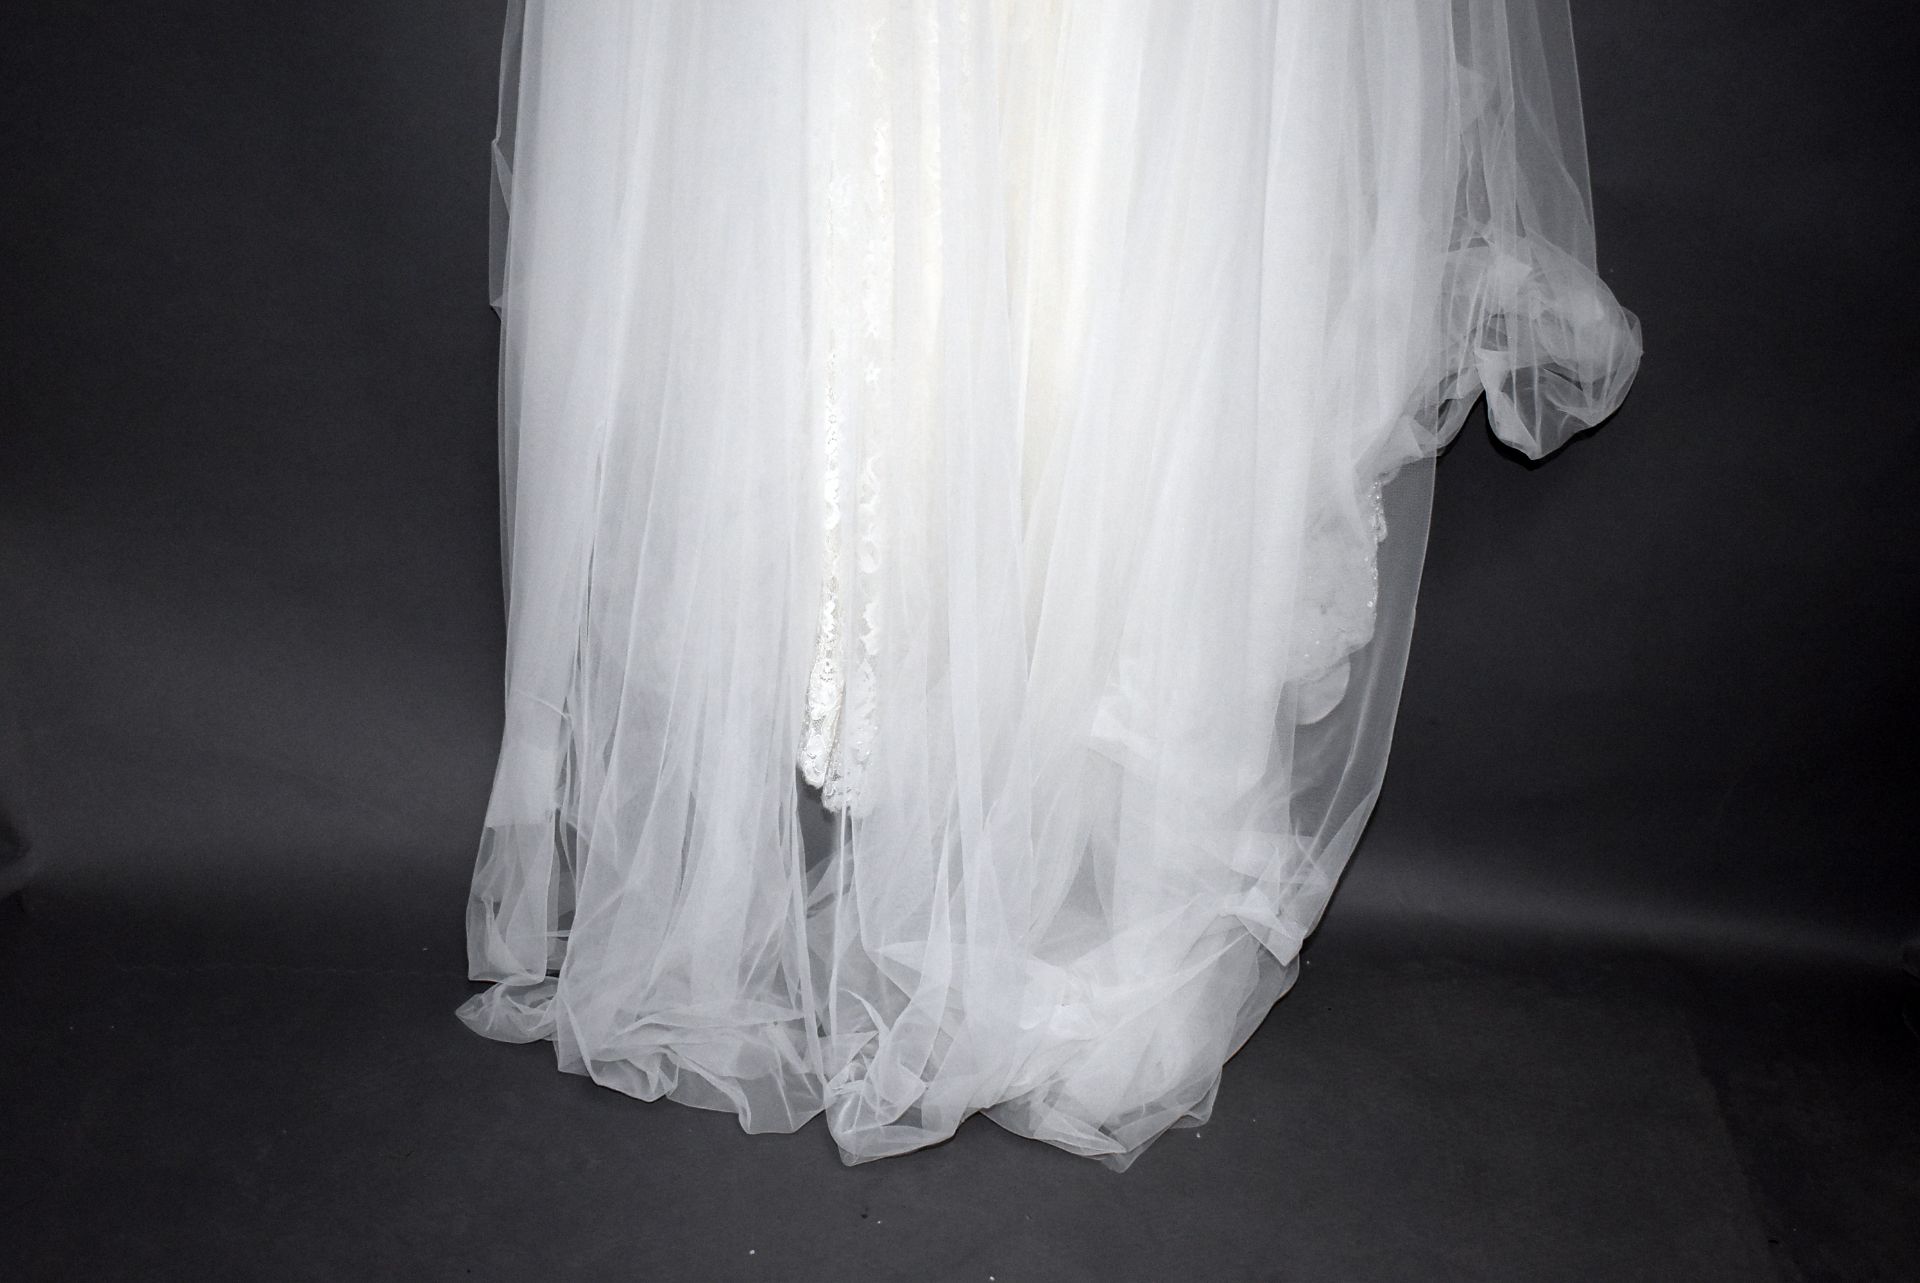 1 x LUSAN MANDONGUS Lace And Chiffon Designer Wedding Dress Bridal Gown RRP £1,450 UK 12 - Image 2 of 6